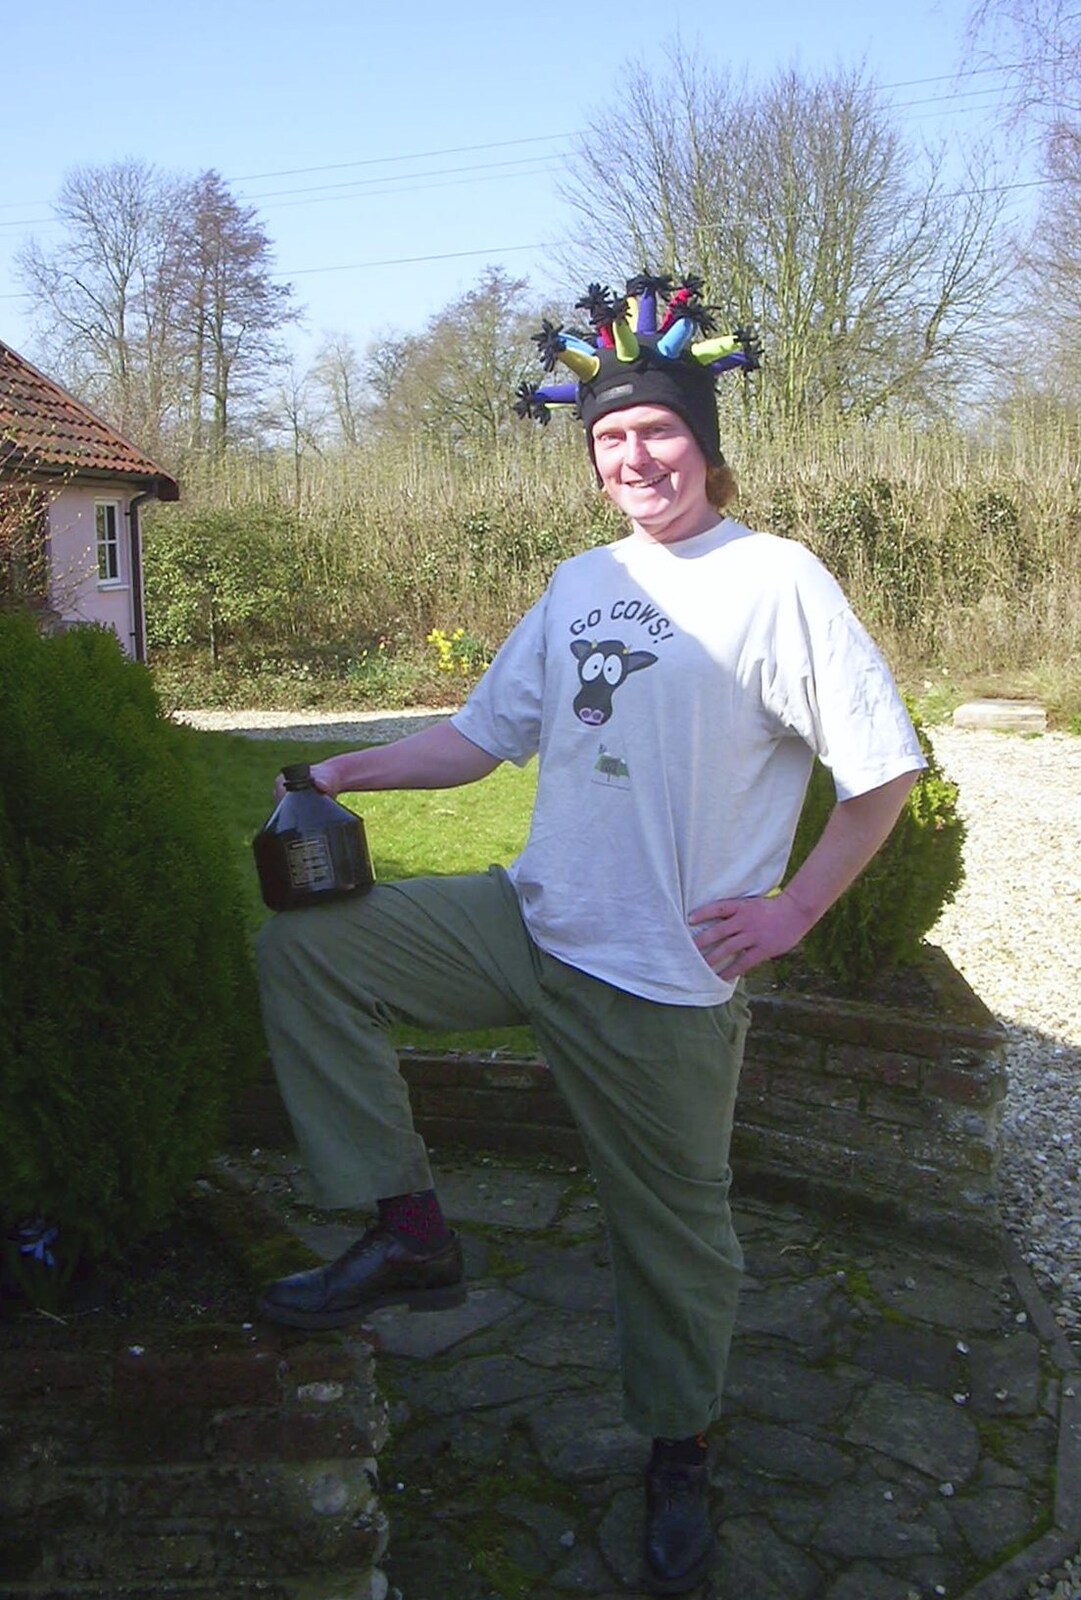 Carolyn on Sunday, Wymondham, Norfolk - 23rd March 2003: Wavy's got his best party hat on already